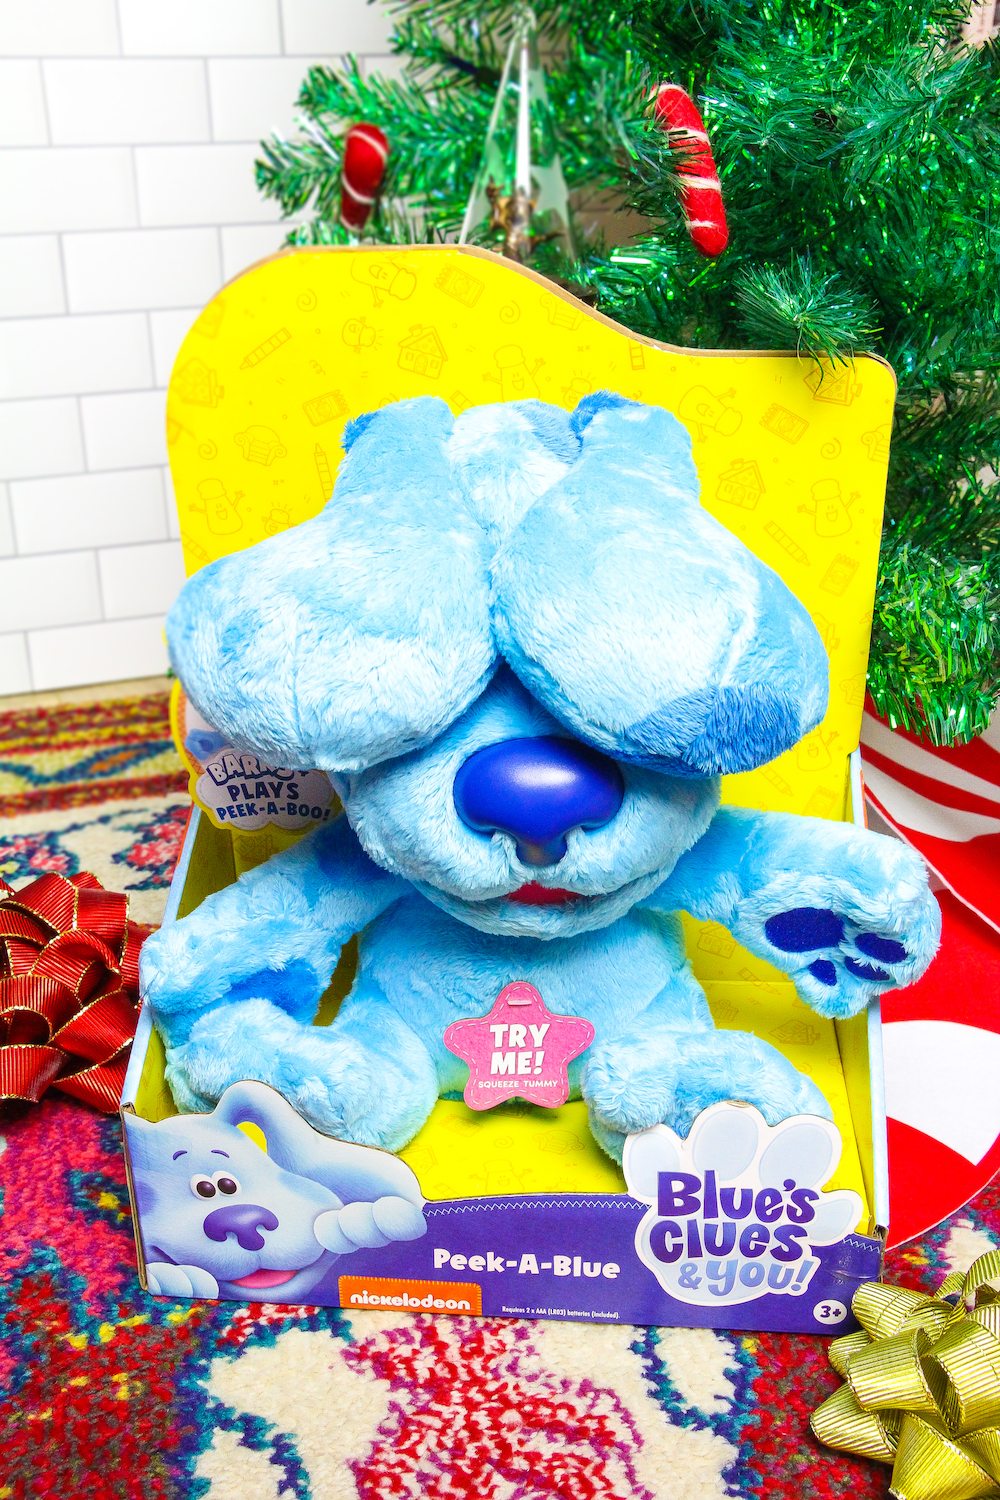 Blue’s Clues & You Peek-A-Boo Blue Squeeze Tummy! 10-inch feature plush